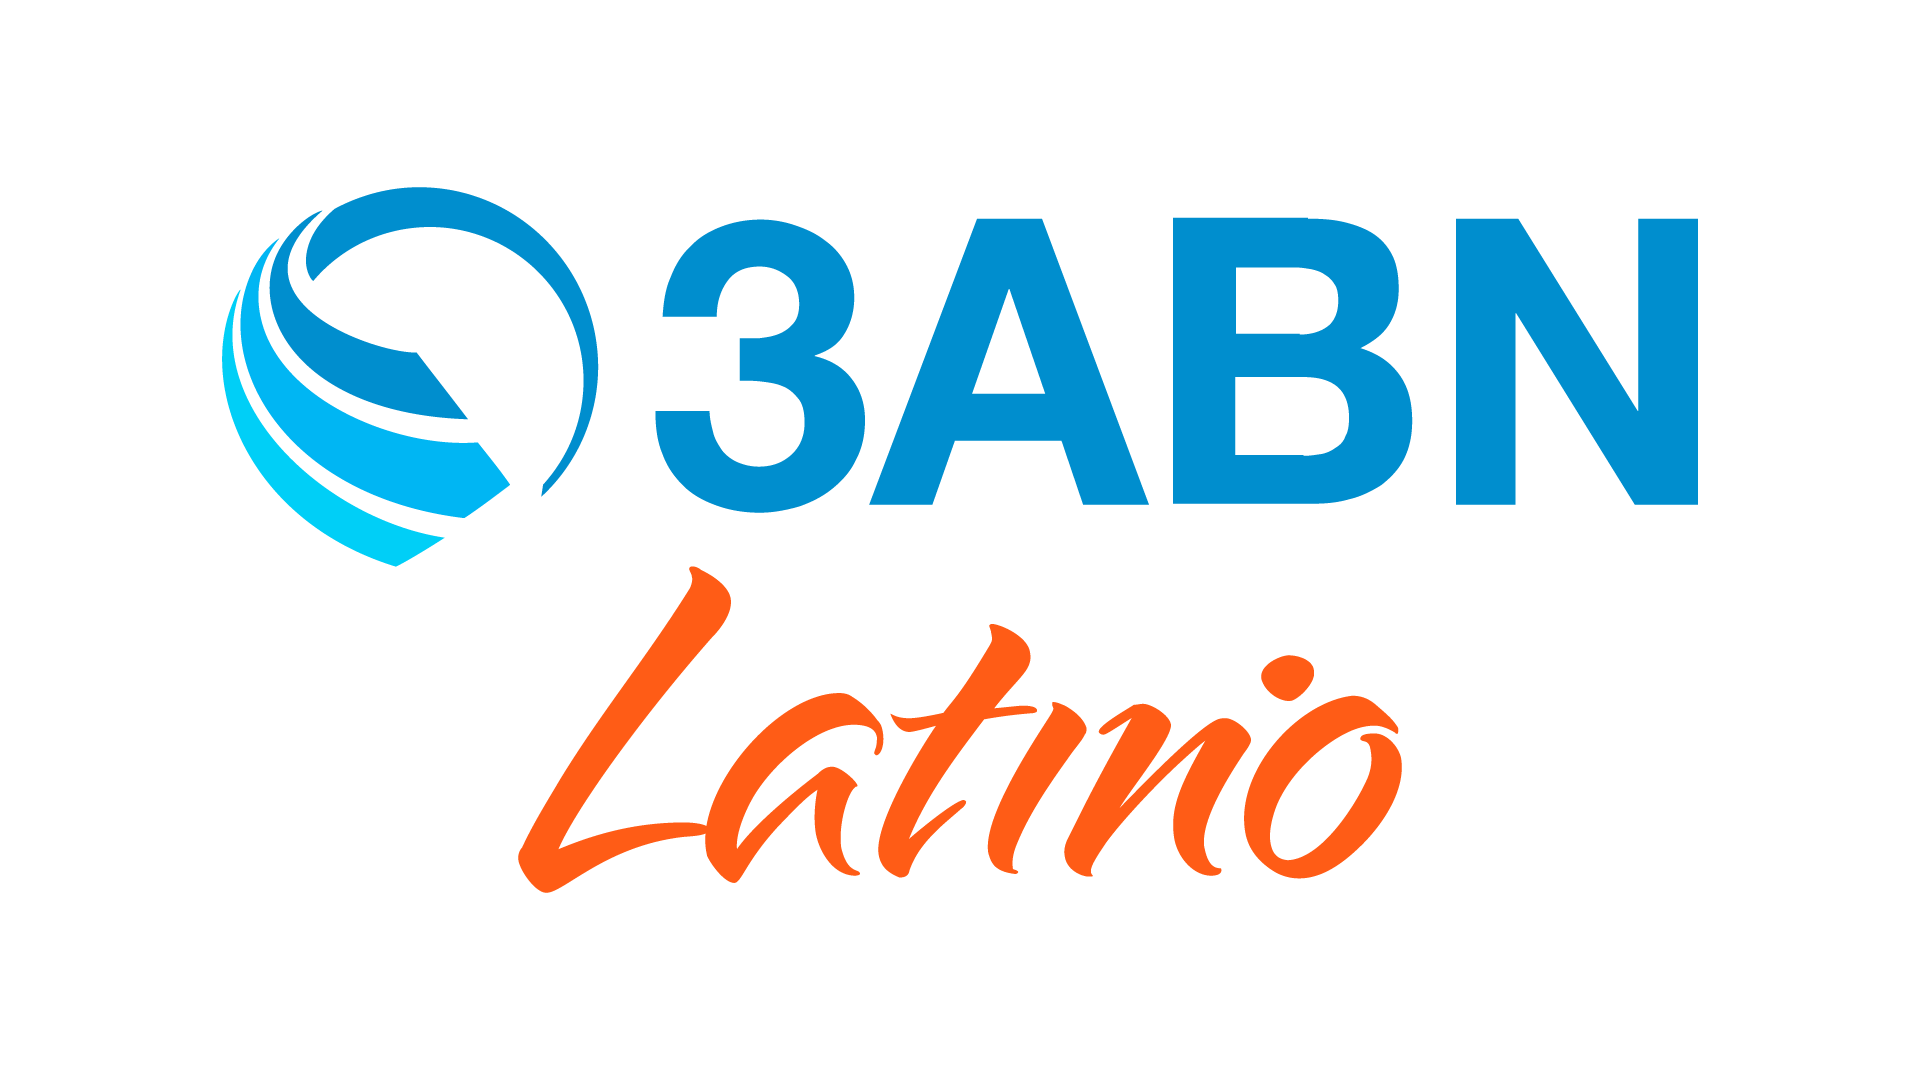 3ABN Latino en directo, Online